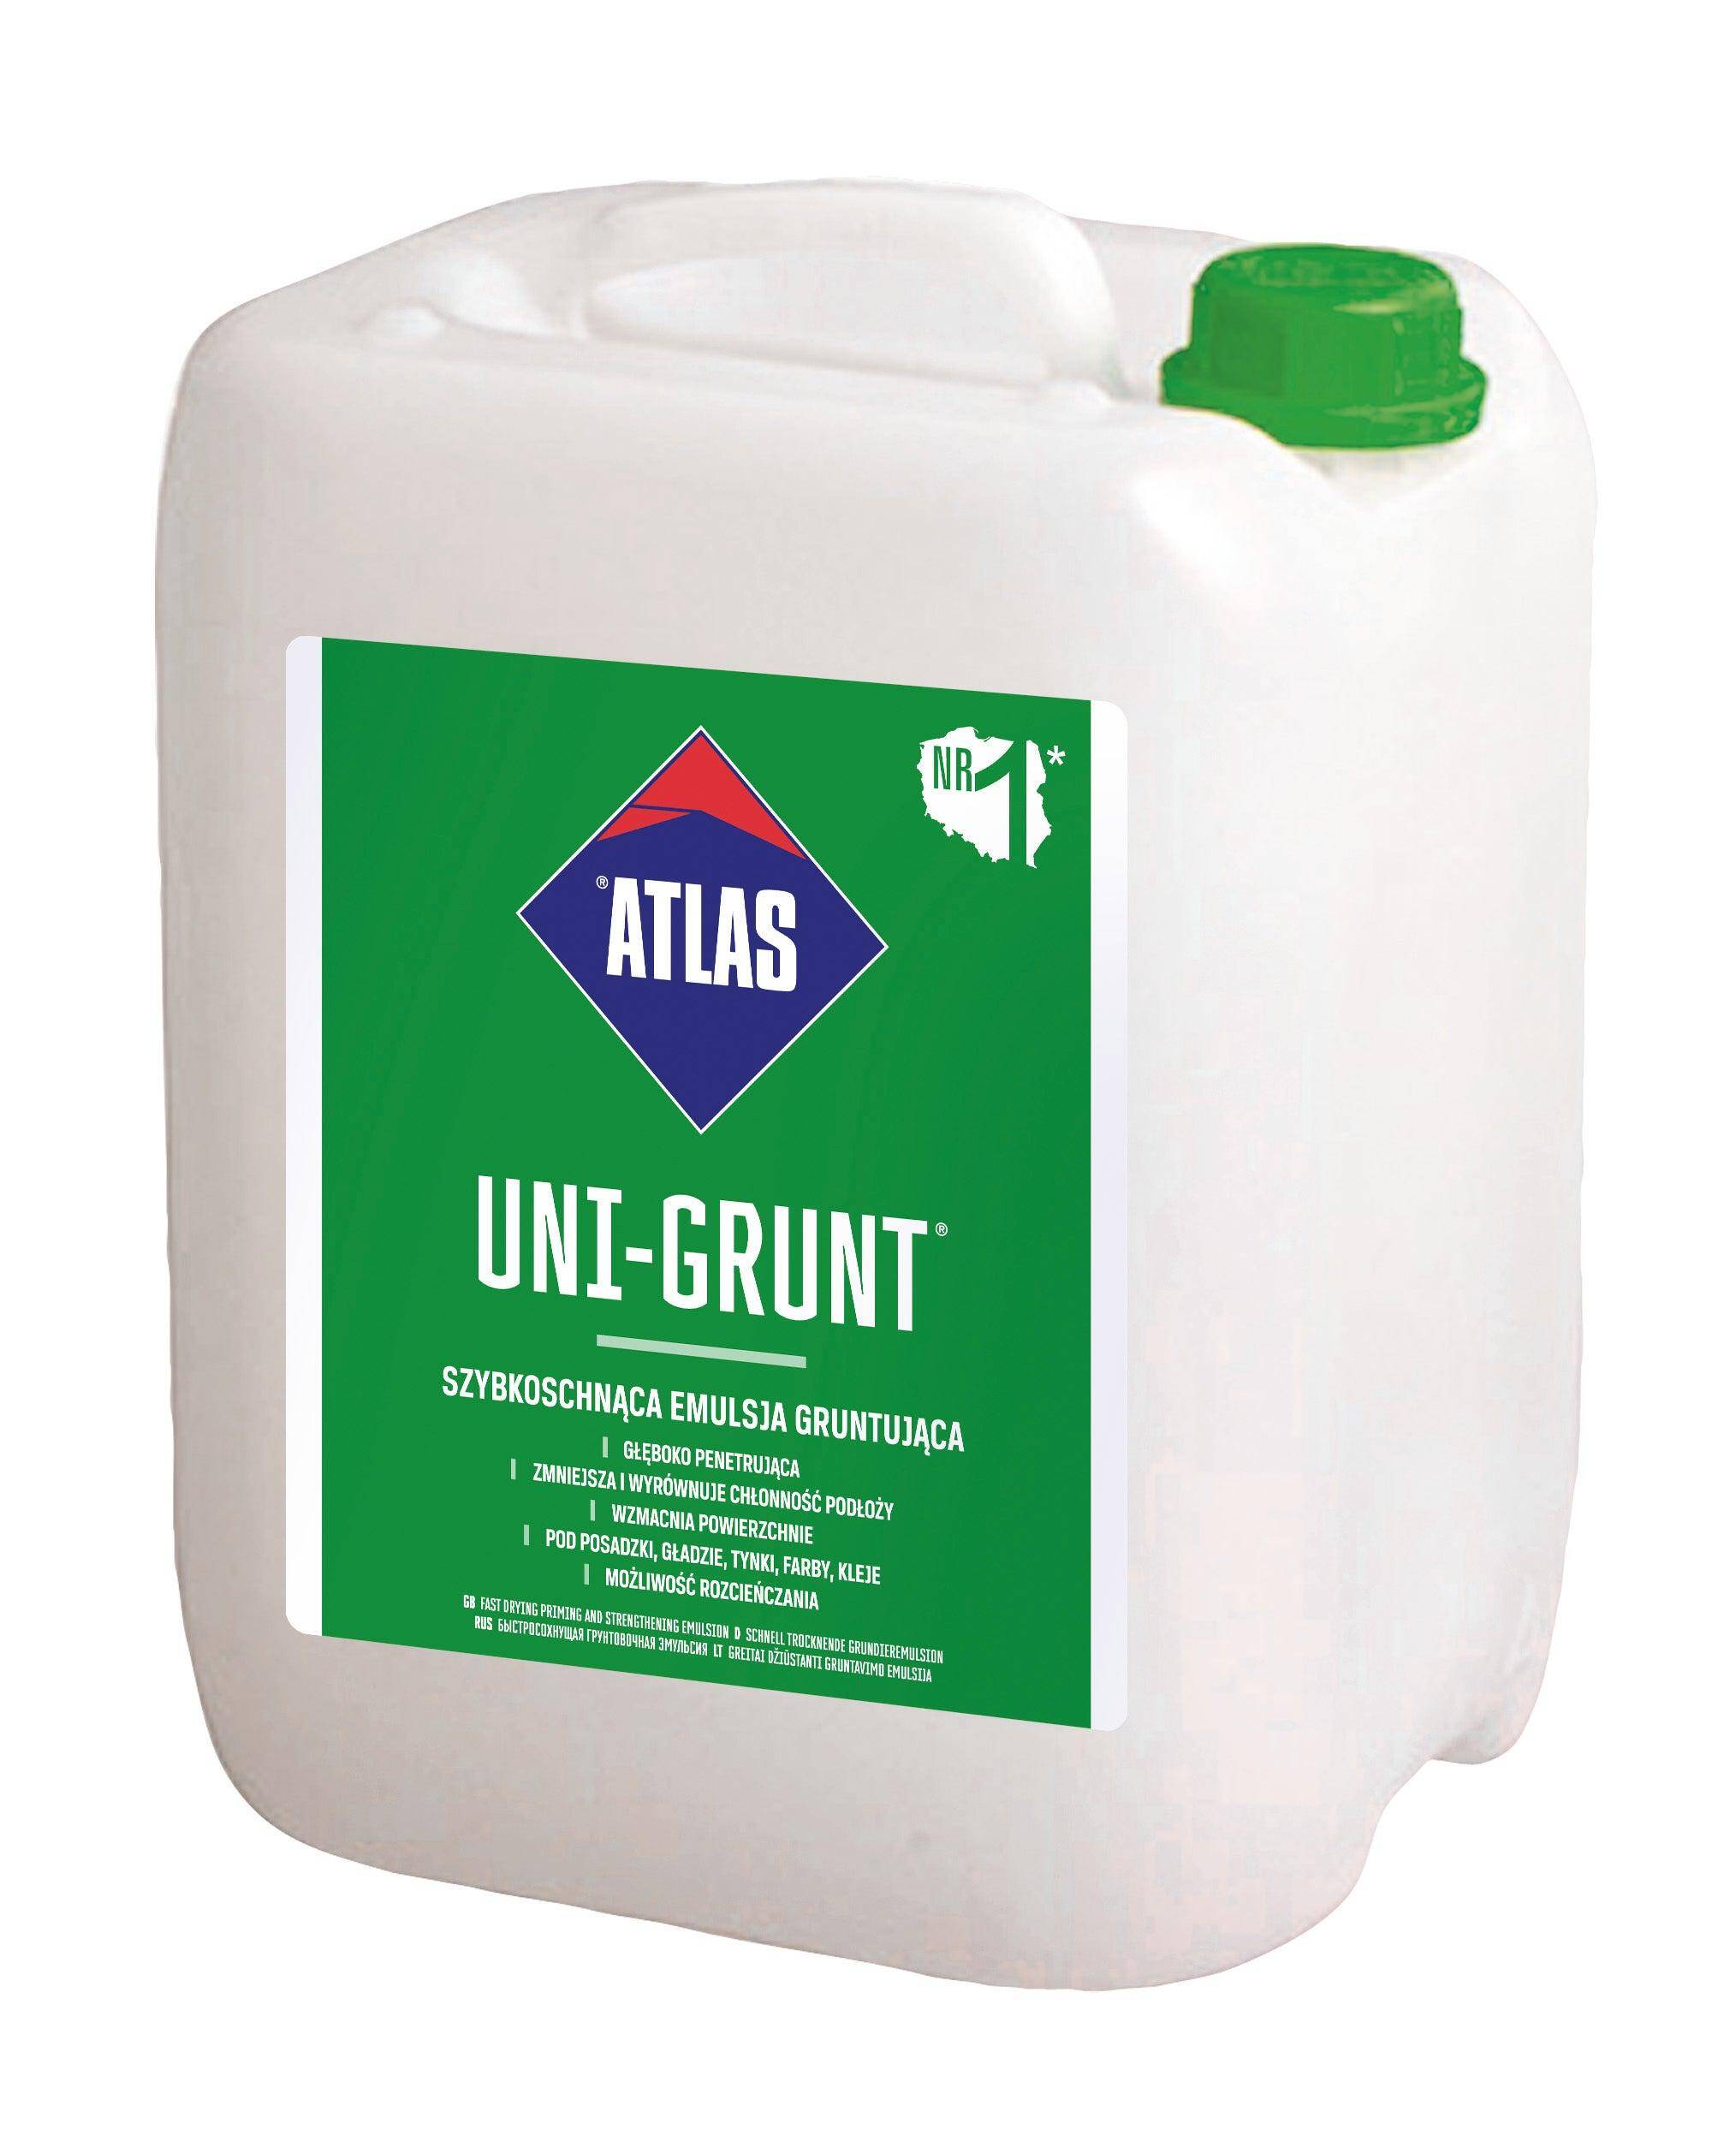 ATLAS Uni-Grunt 10 kg